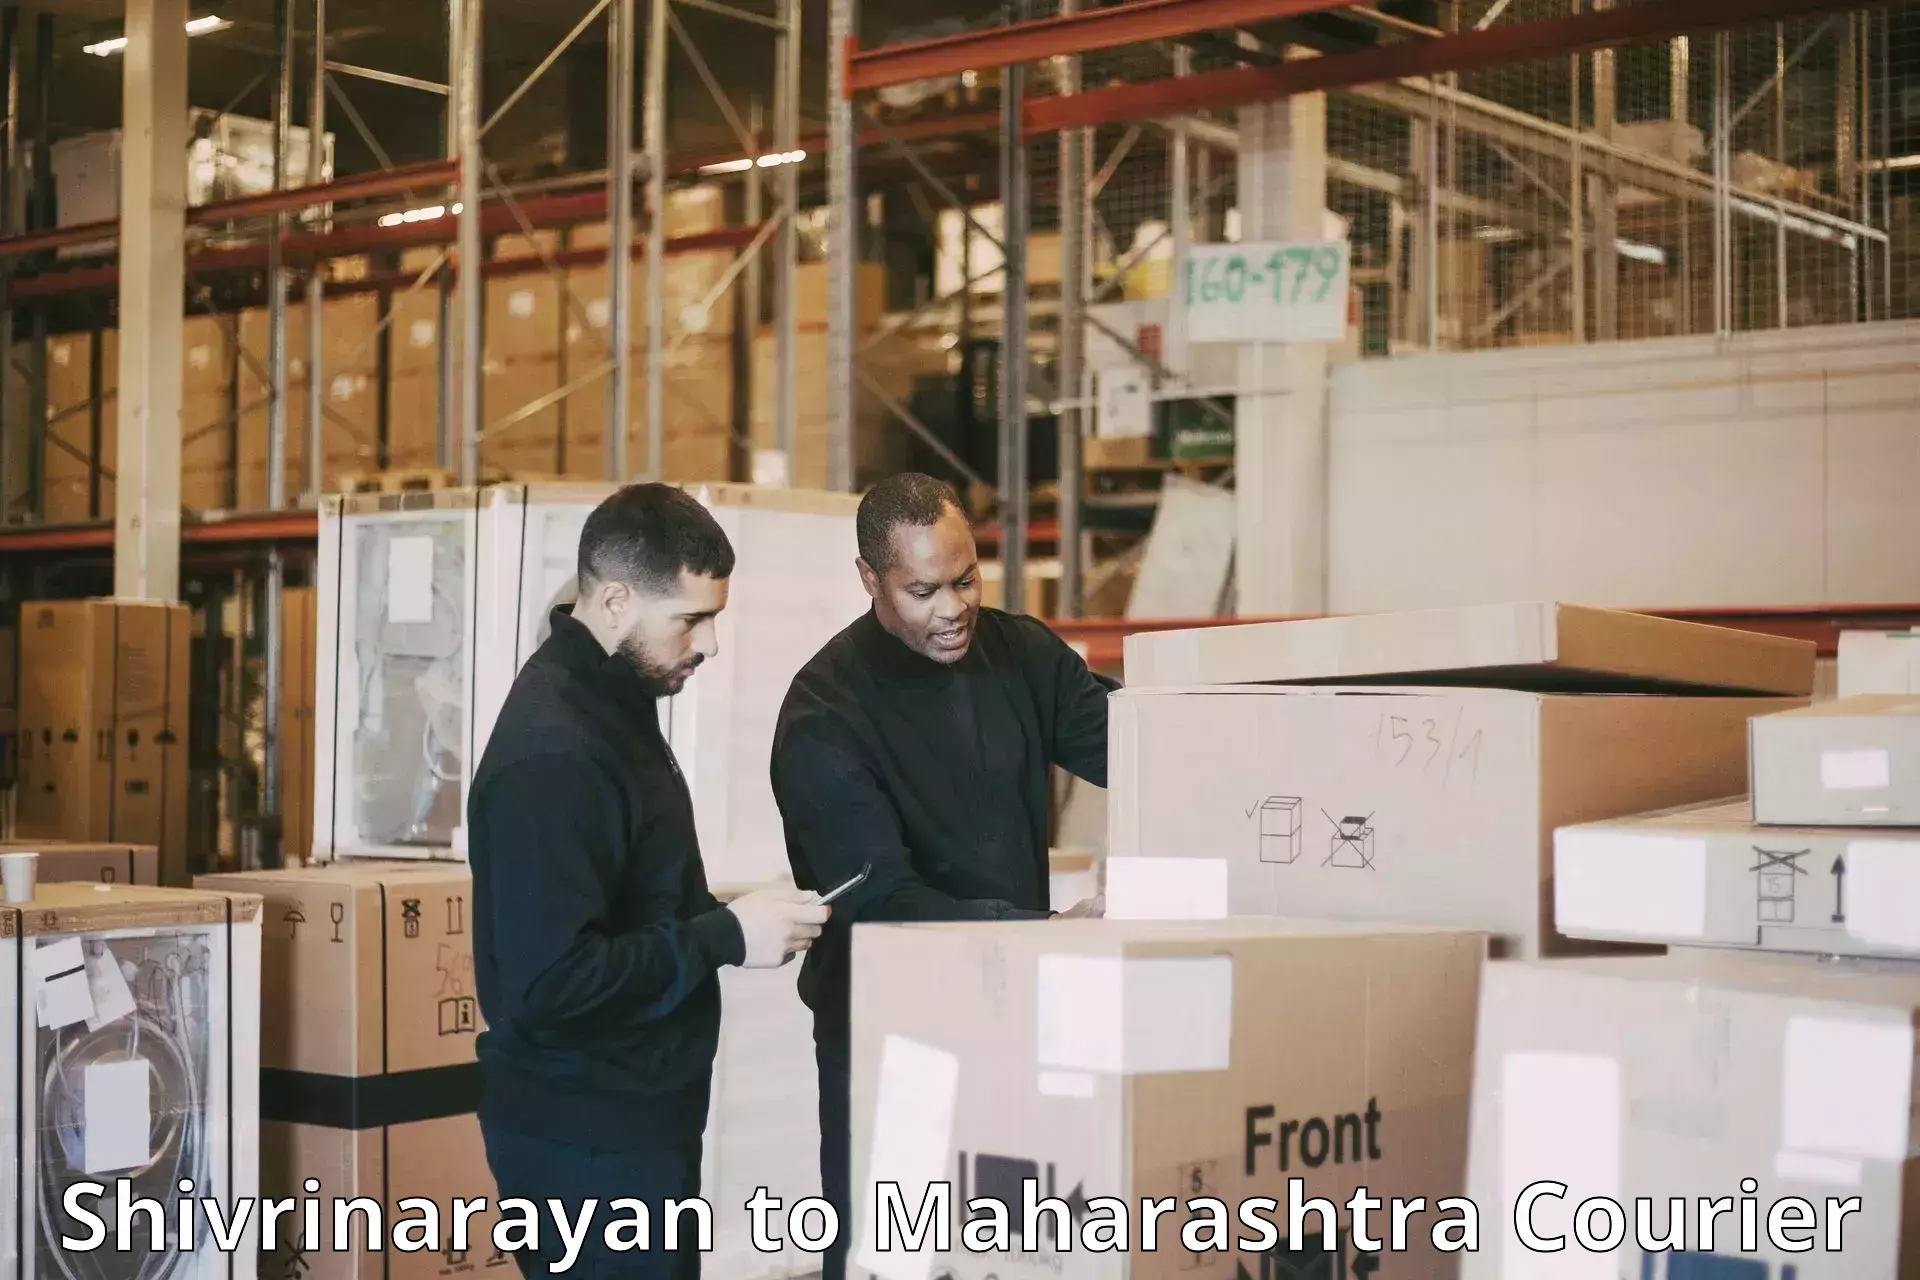 Courier service partnerships in Shivrinarayan to Chembur